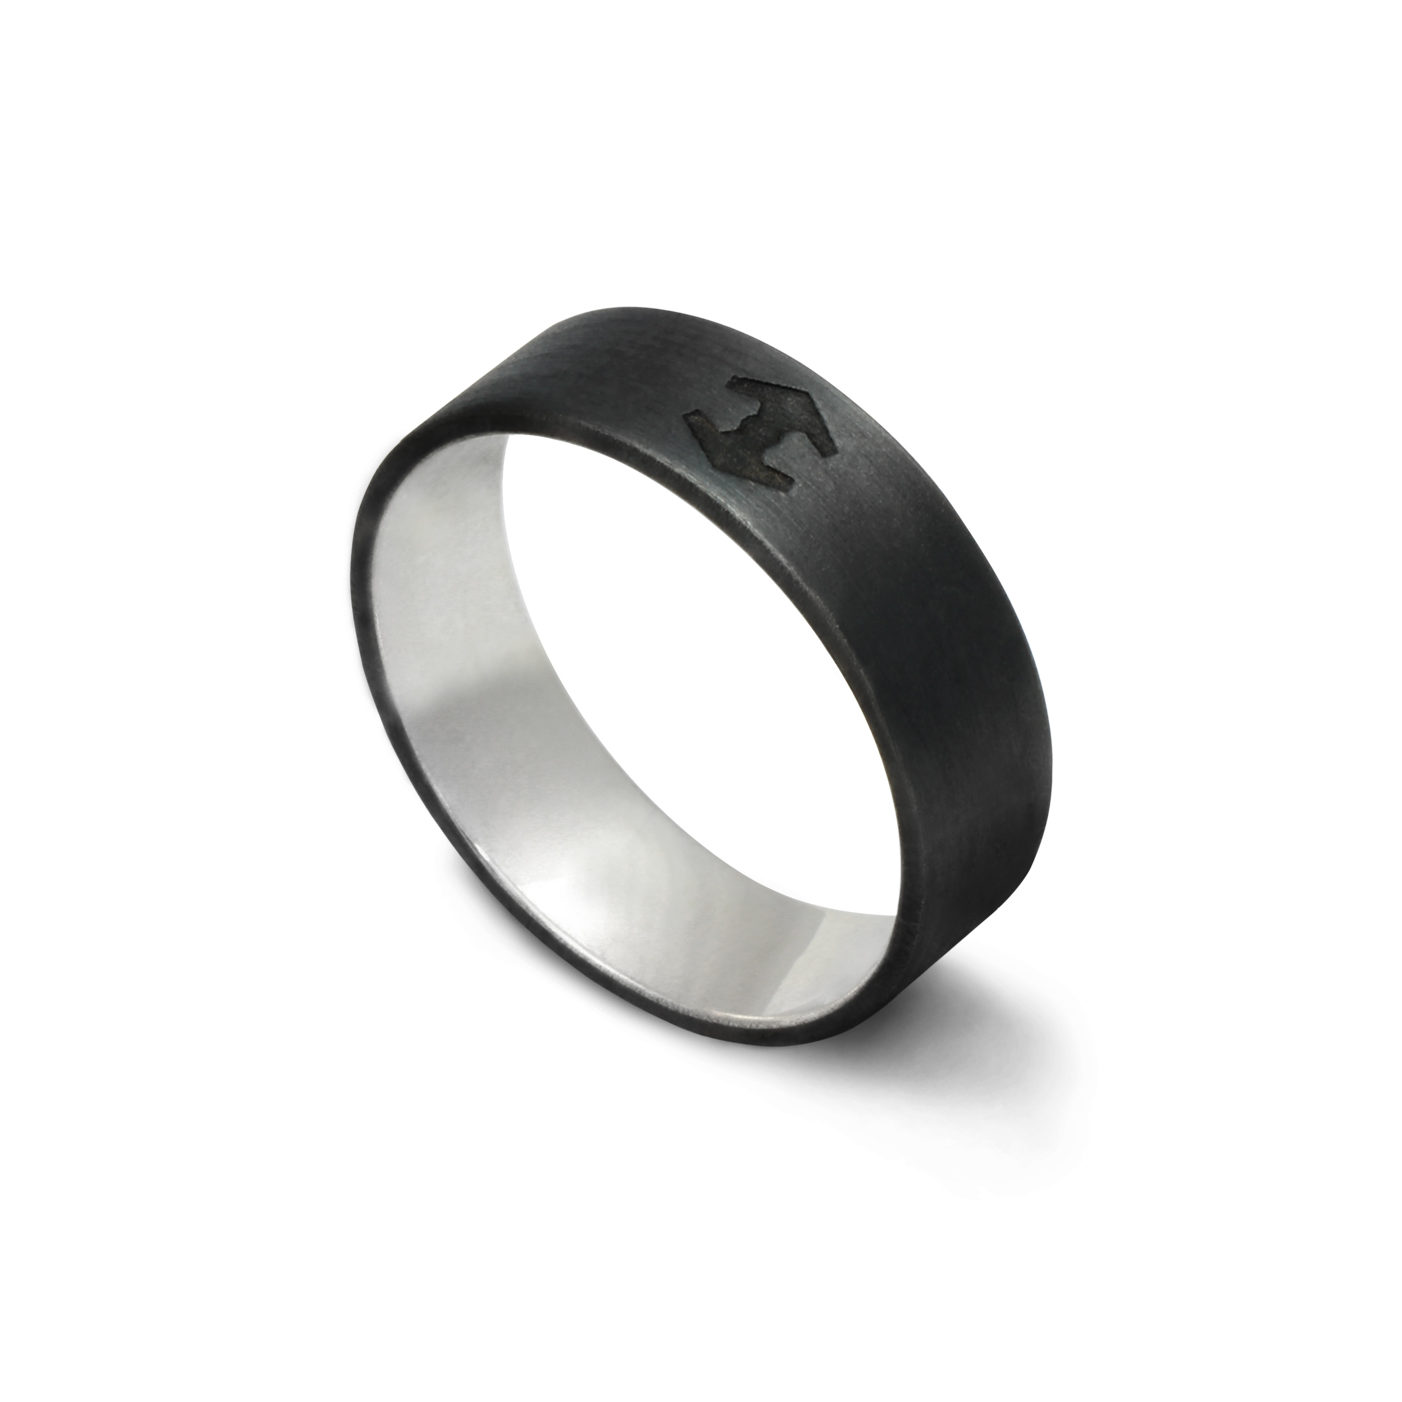 Oxidised Silver HALO ring